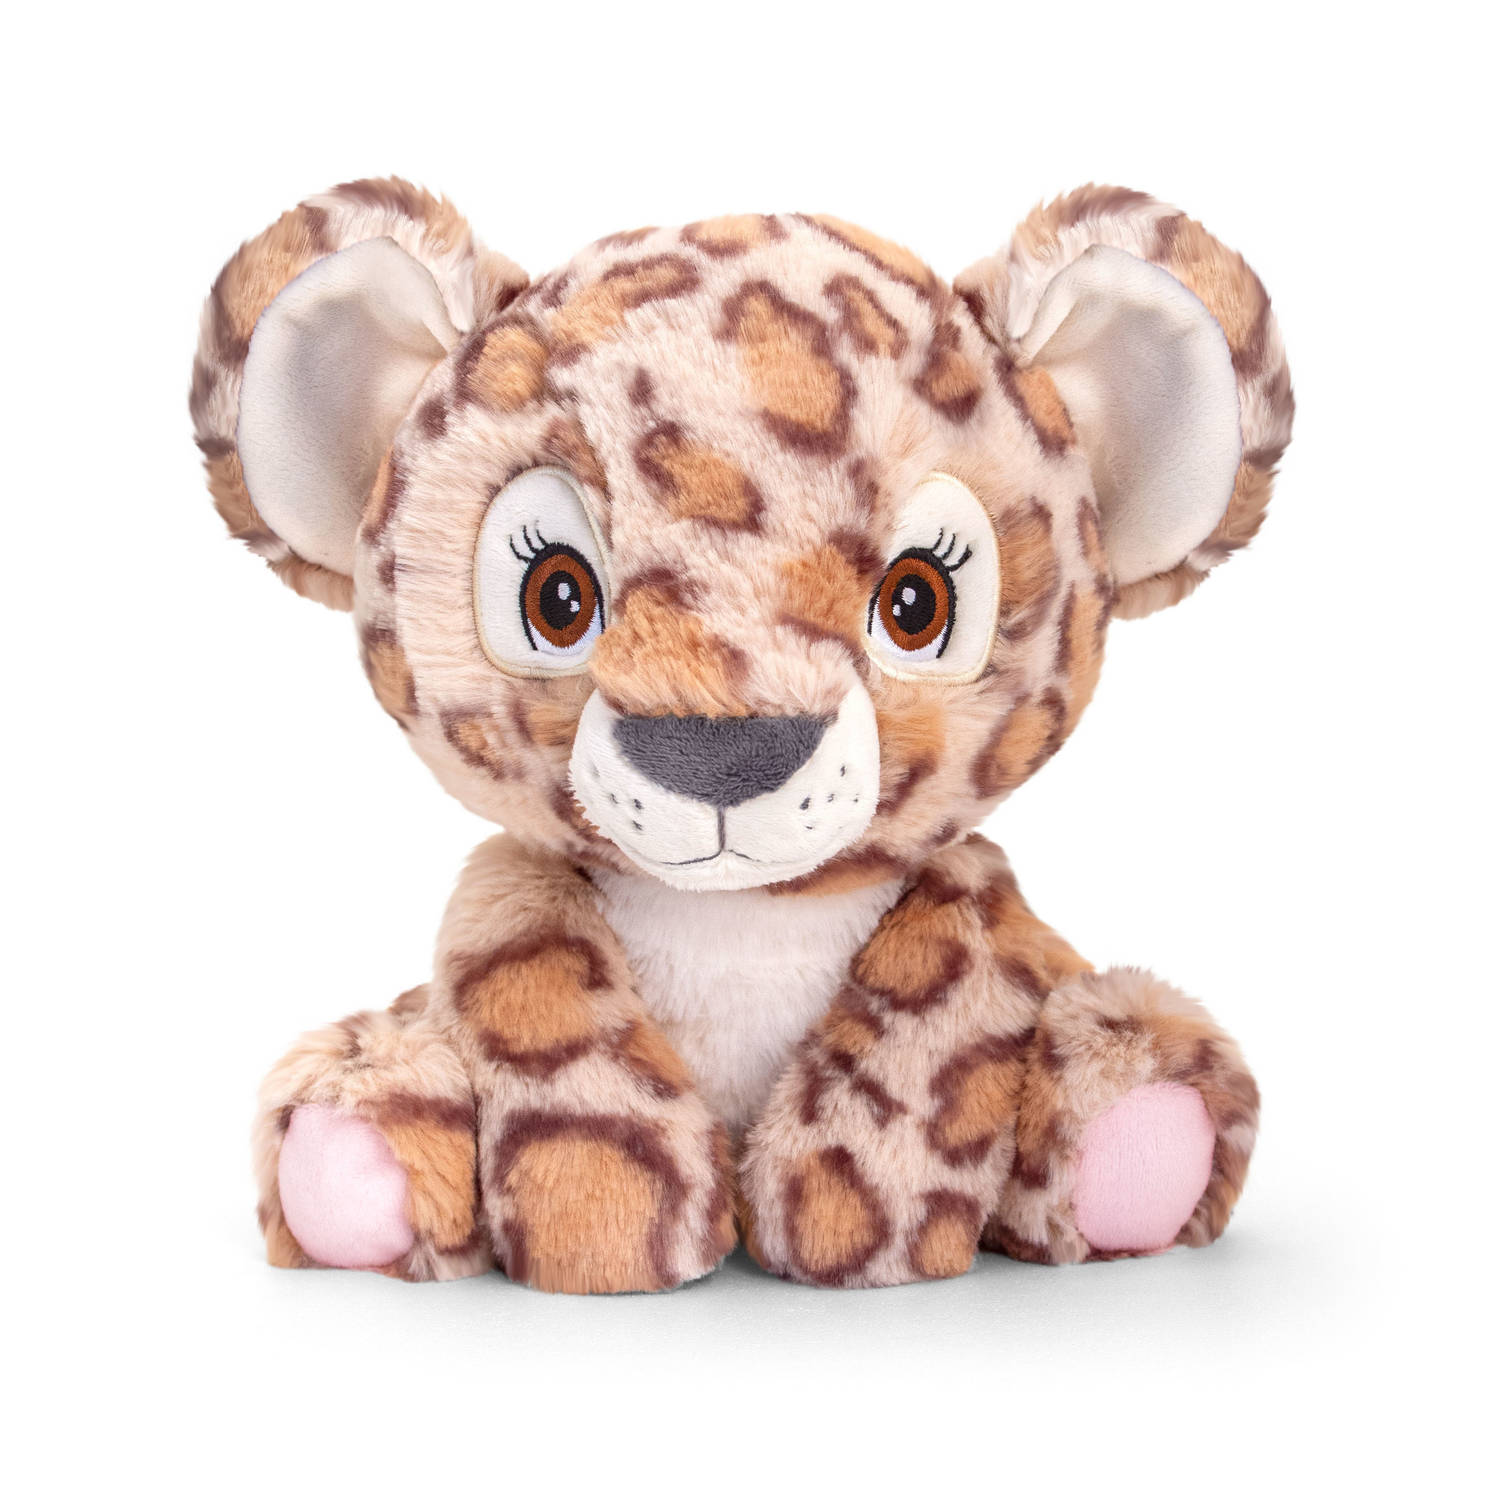 Pluche knuffel dieren nevel panter/luipaard 25 cm - Knuffelbeesten speelgoed